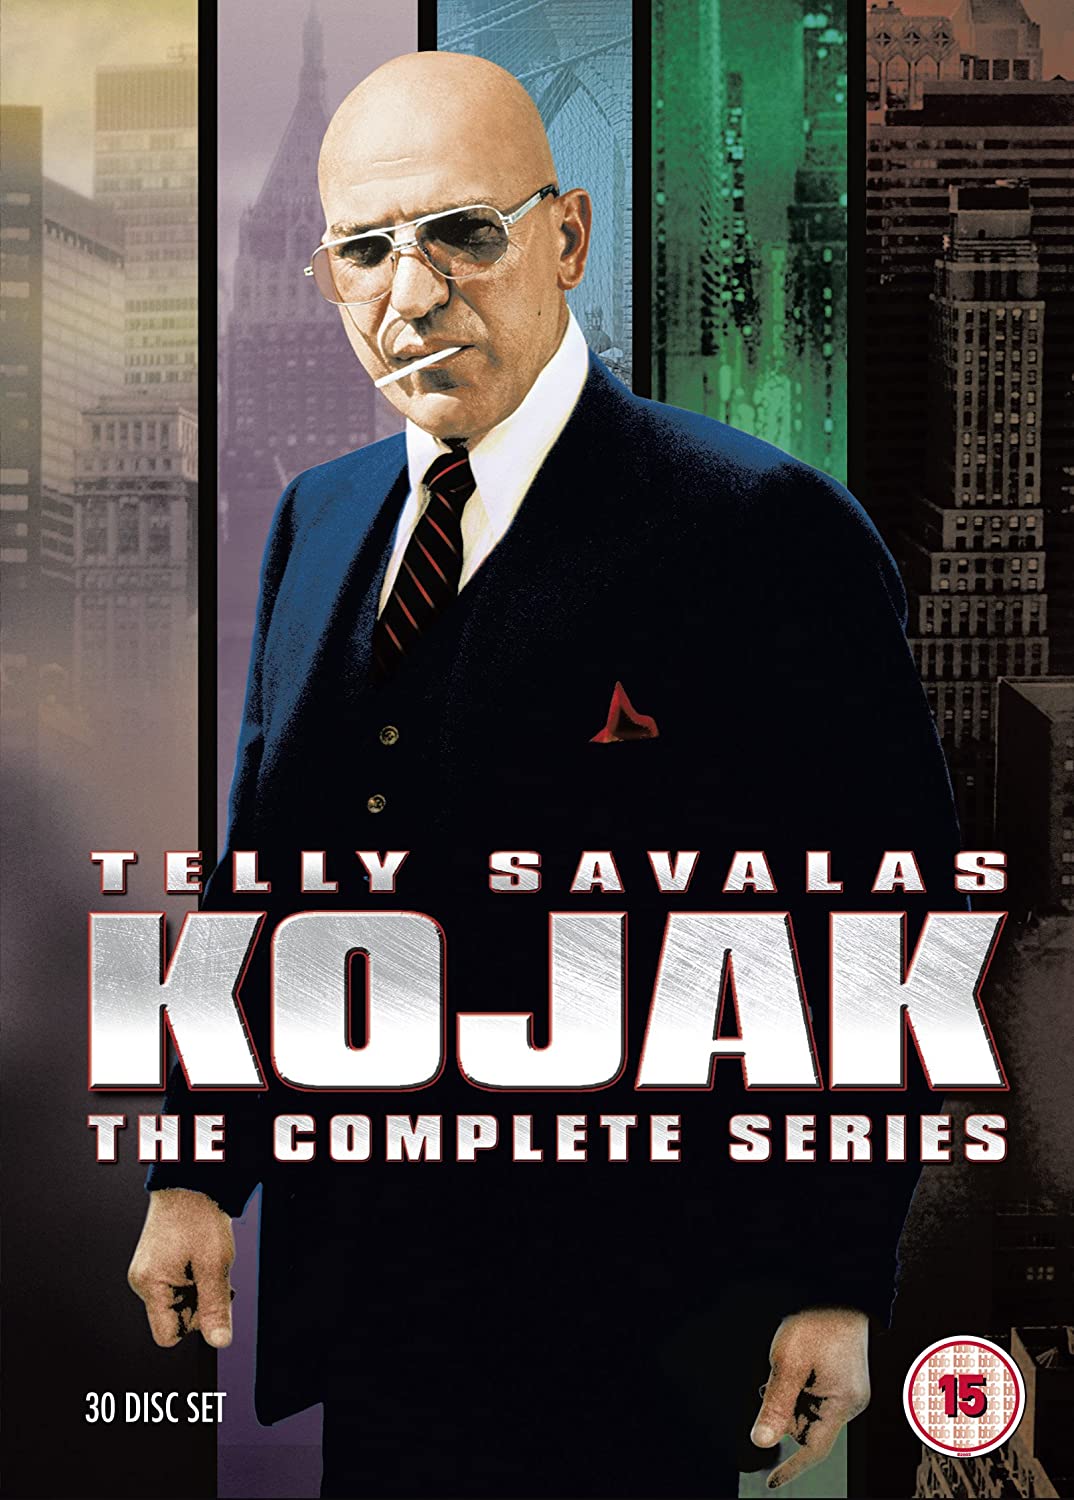 Kojak - The Complete Series - Drama [1973] [DVD]